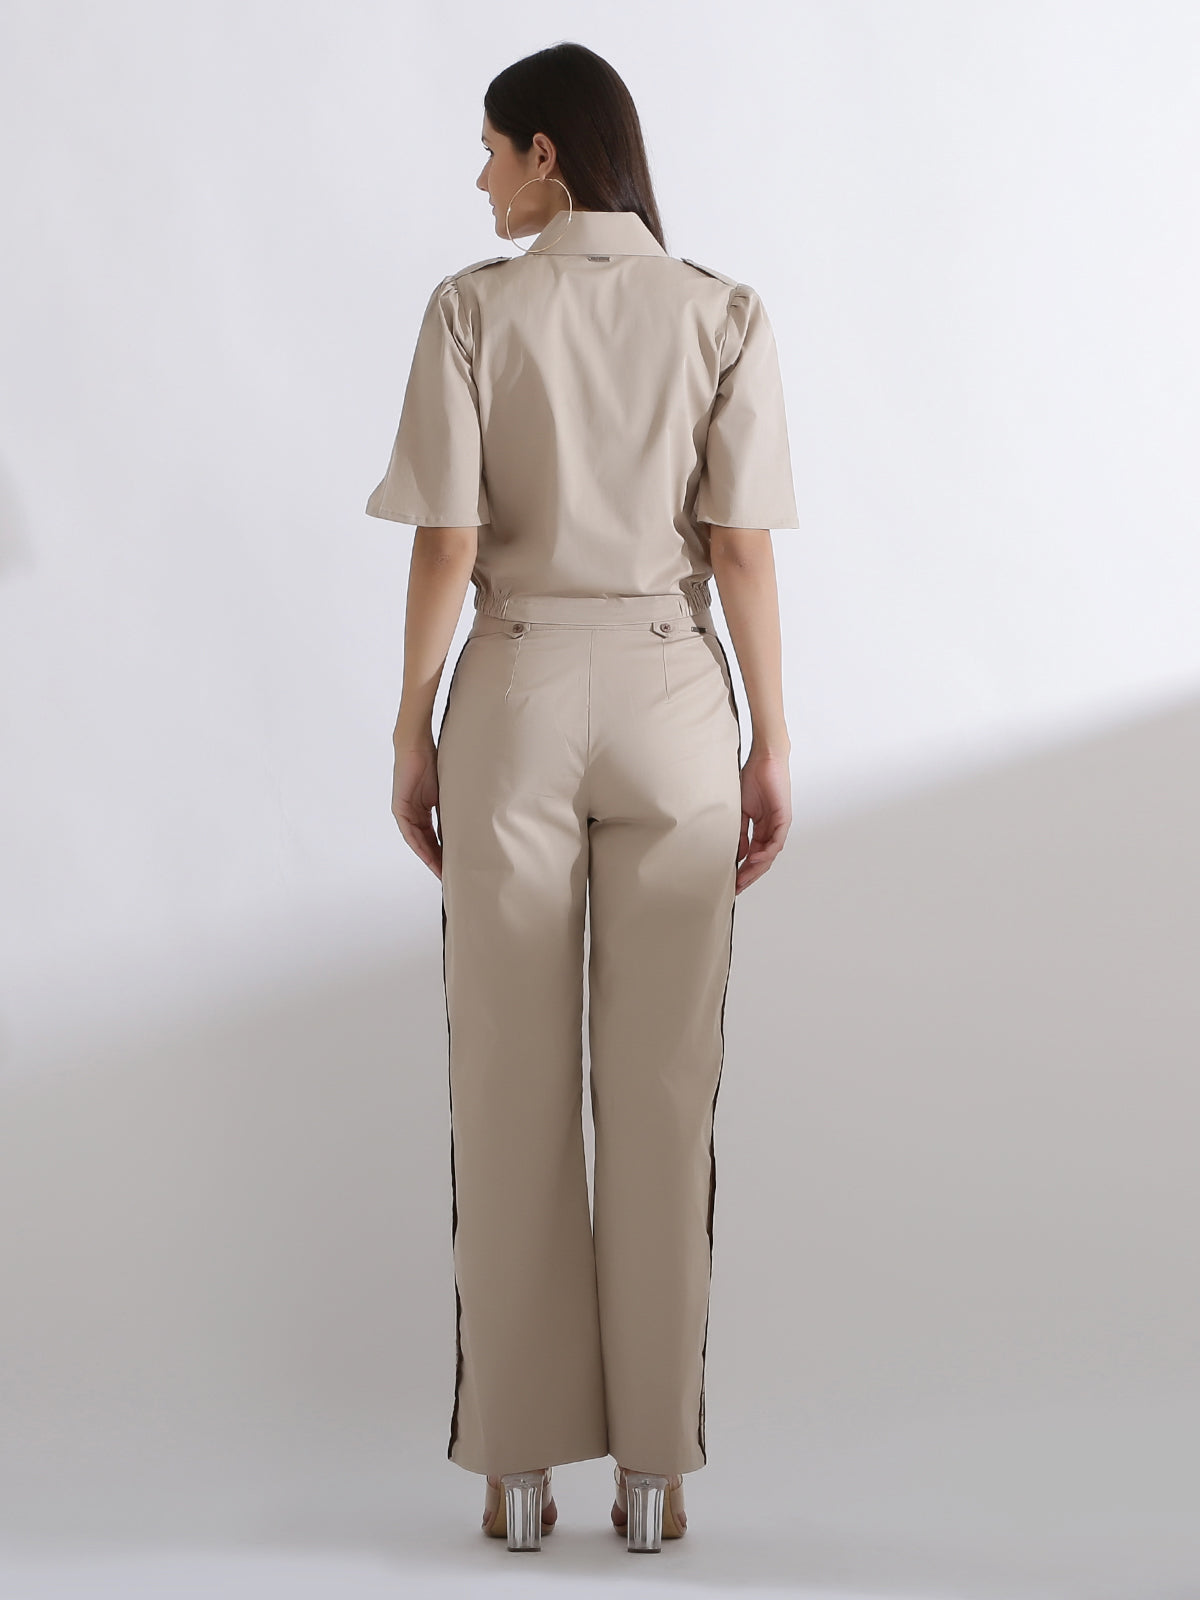 Best Trousers For Women | POPSUGAR Fashion UK